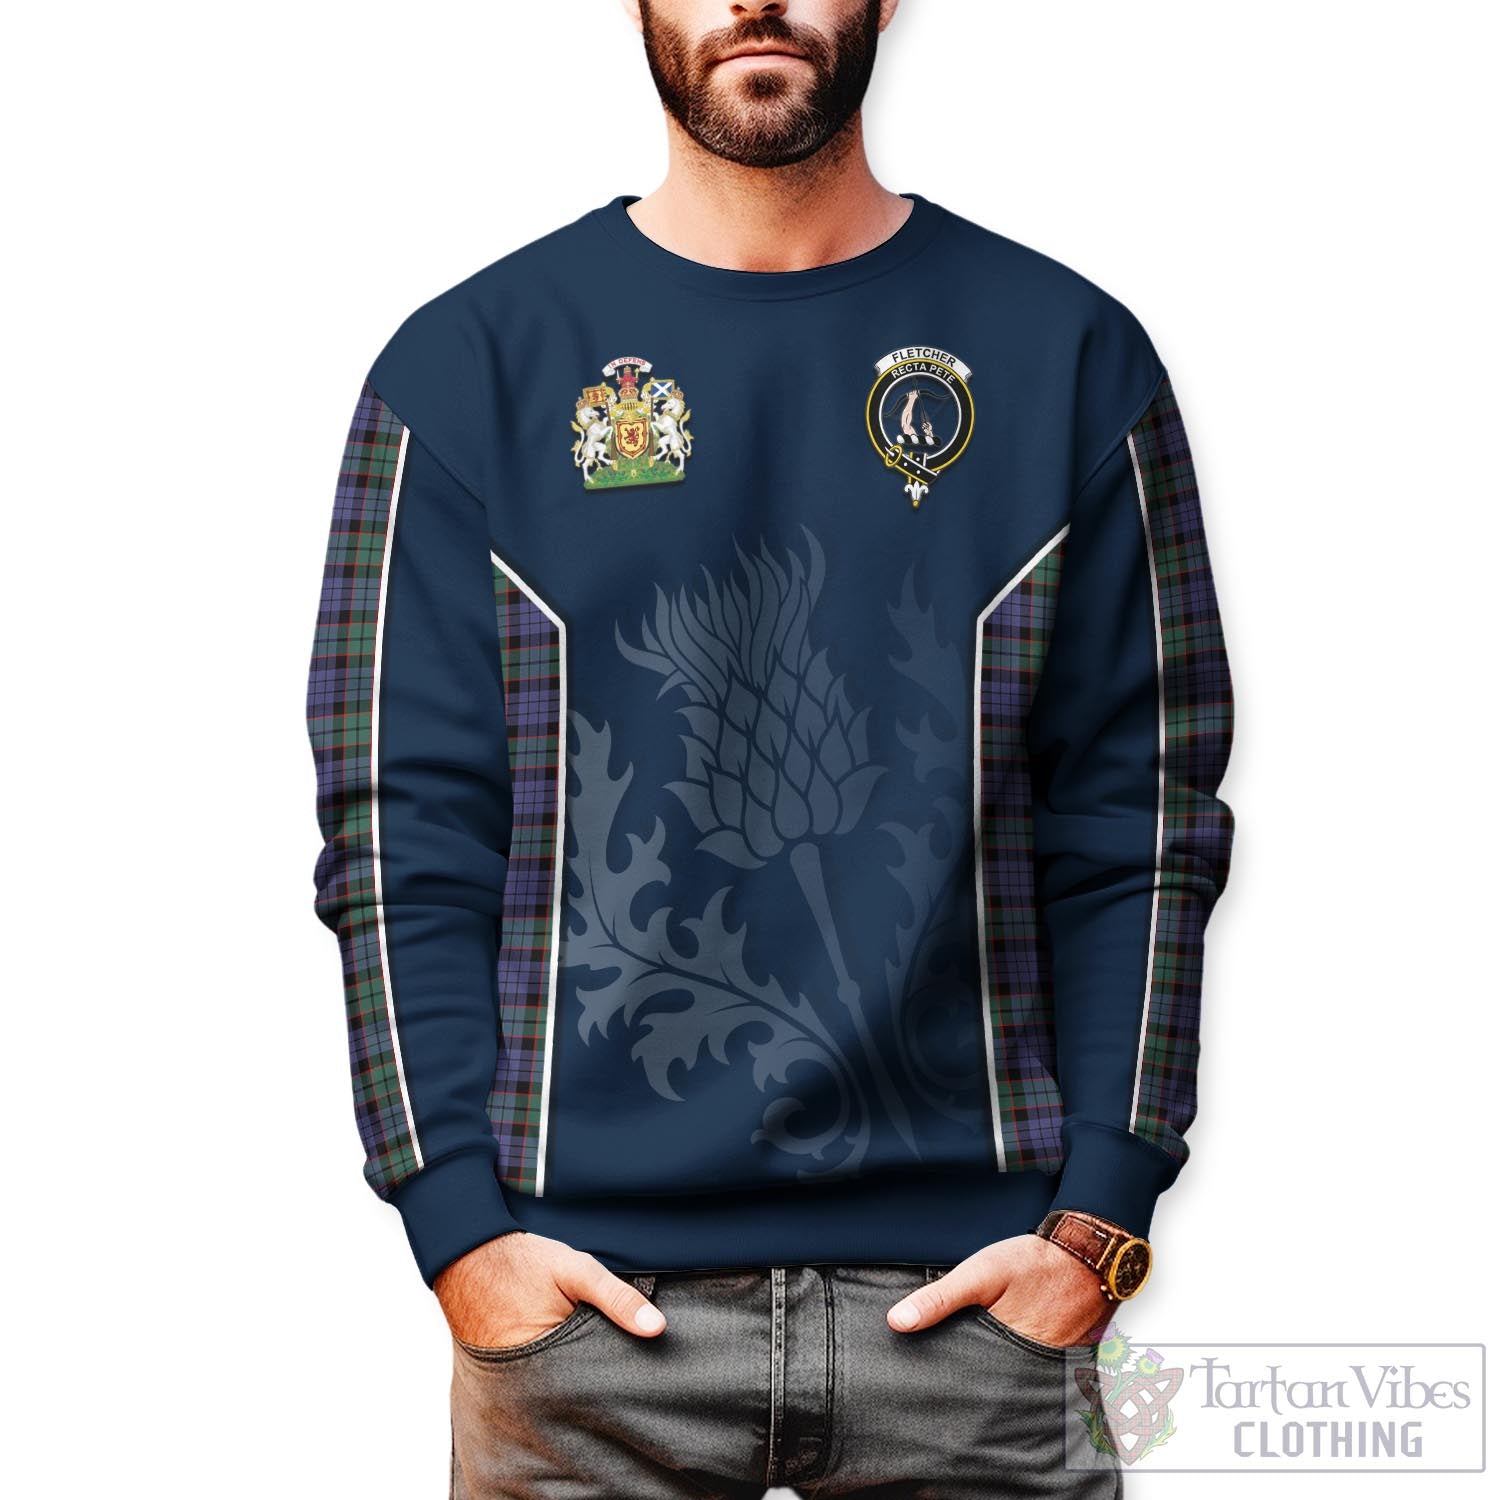 Tartan Vibes Clothing Fletcher Modern Tartan Sweatshirt with Family Crest and Scottish Thistle Vibes Sport Style